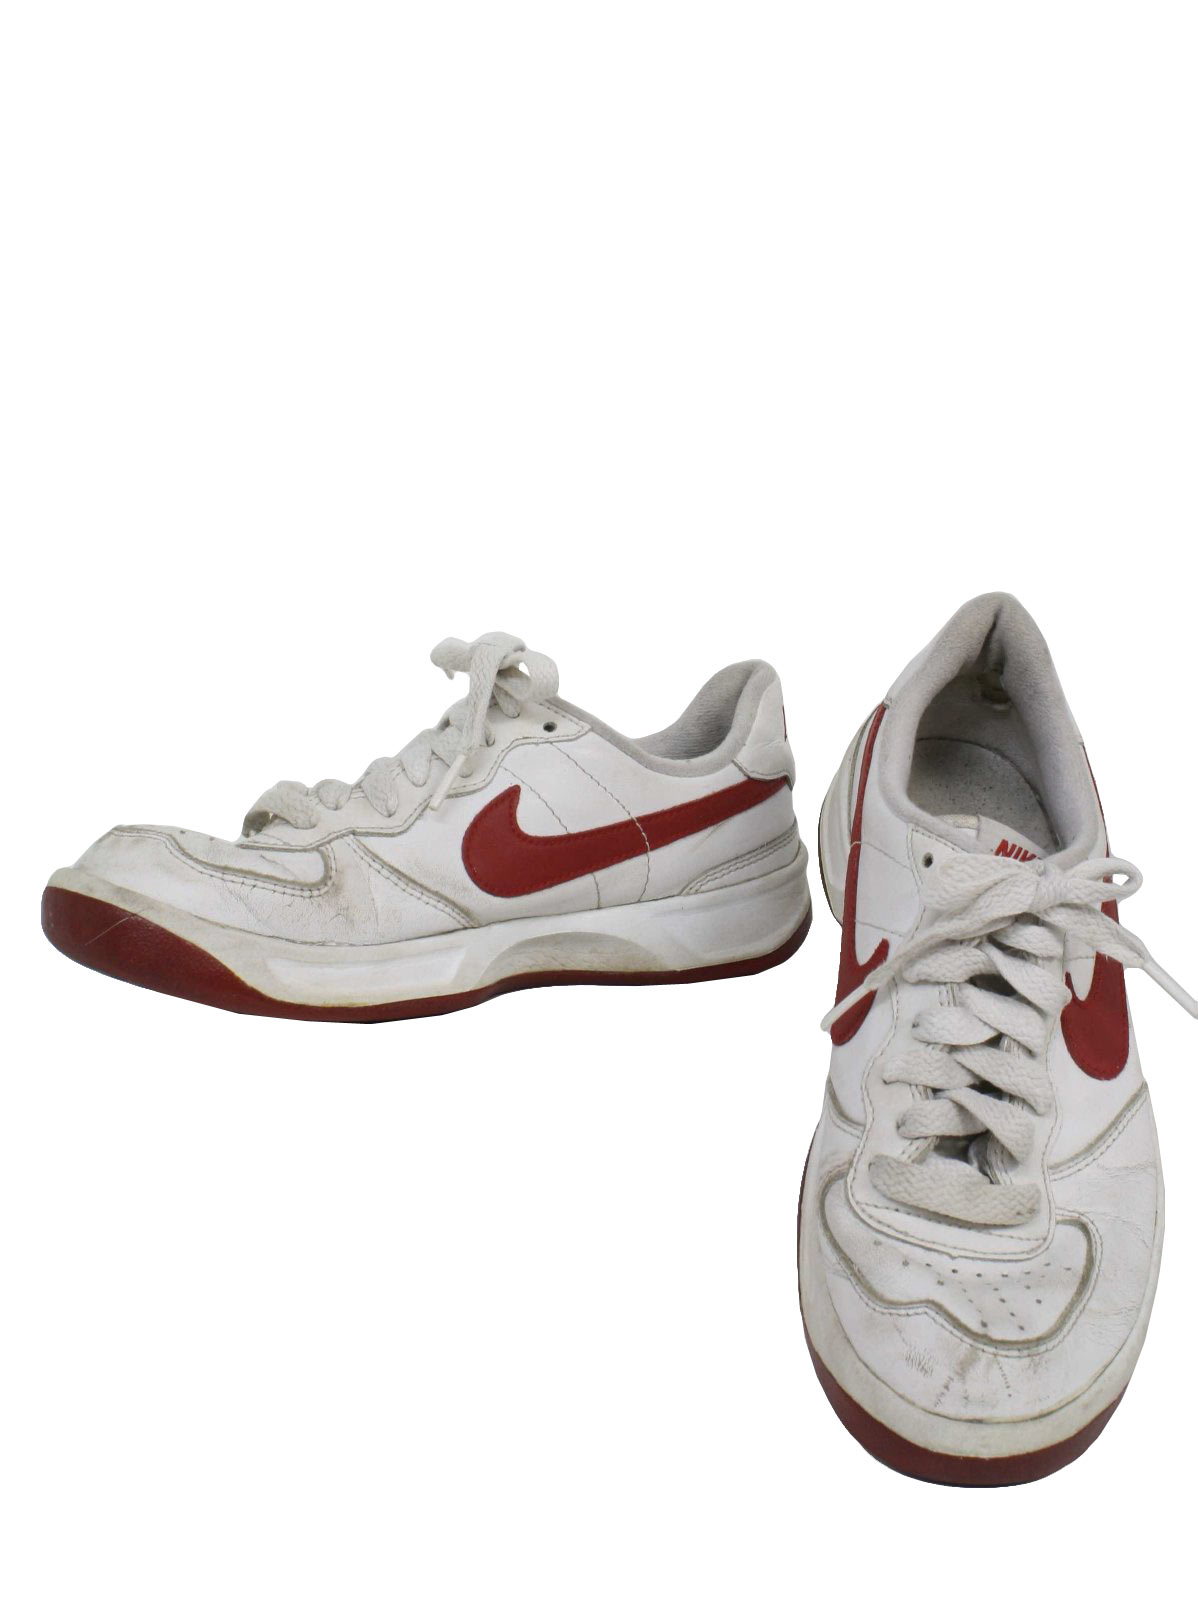 nike 90's tennis shoes